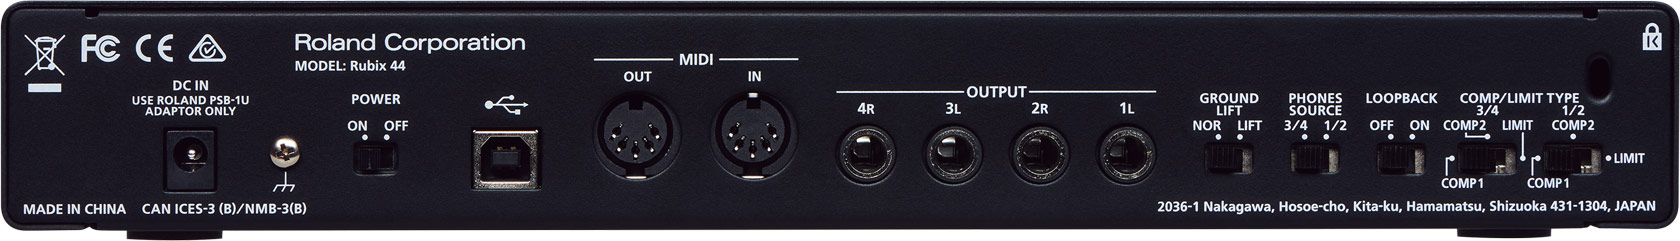 Roland Rubix44 - USB audio interface - Variation 1